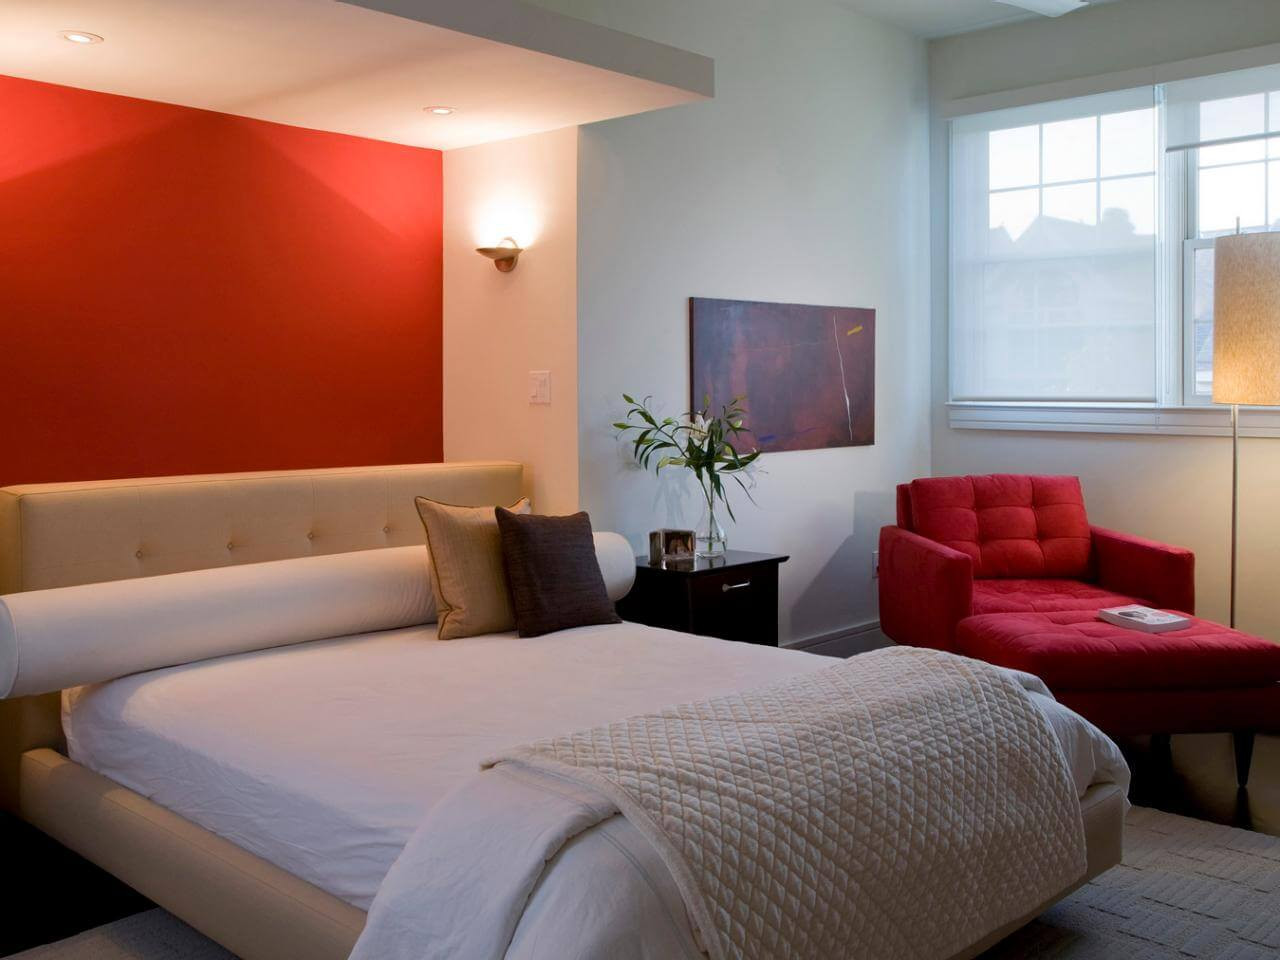 Bedroom Color Scheme Ideas
 20 Best Color Ideas for Bedrooms 2018 Interior